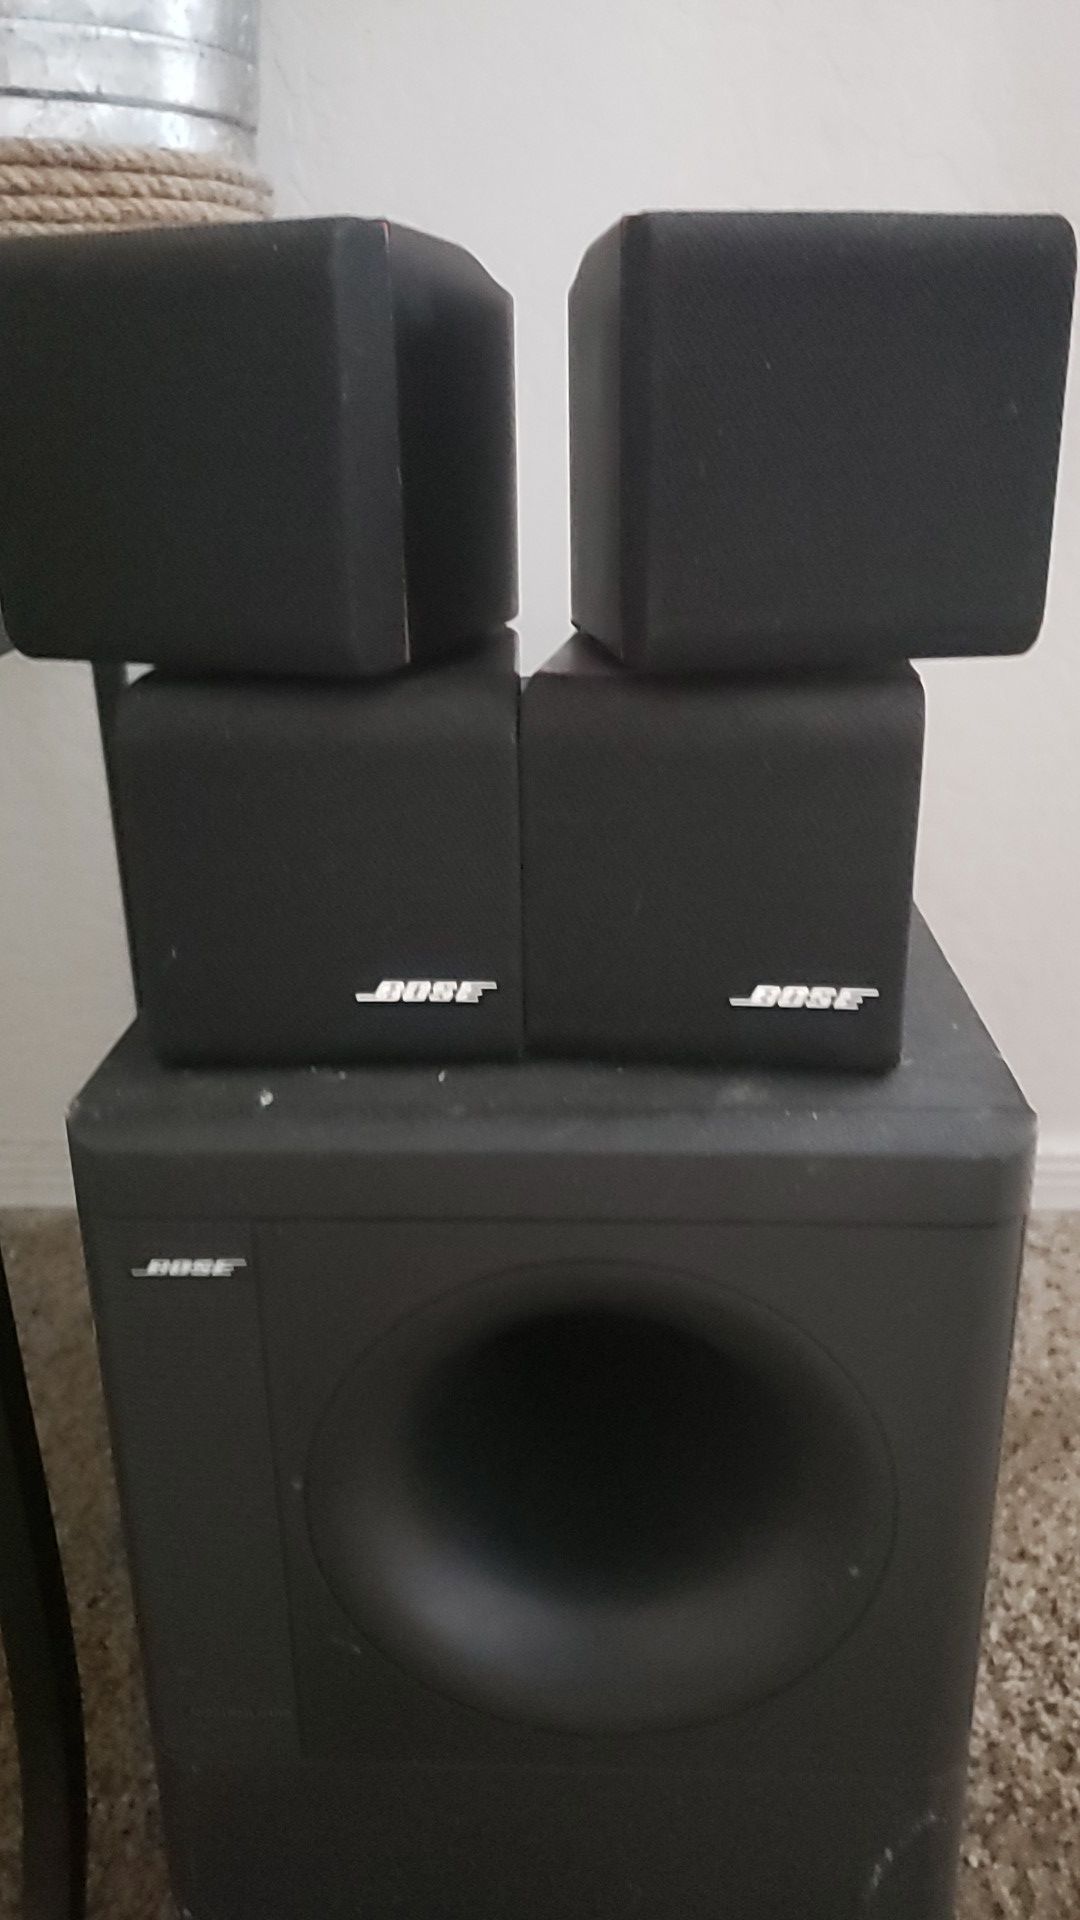 Bose surround sound speakers